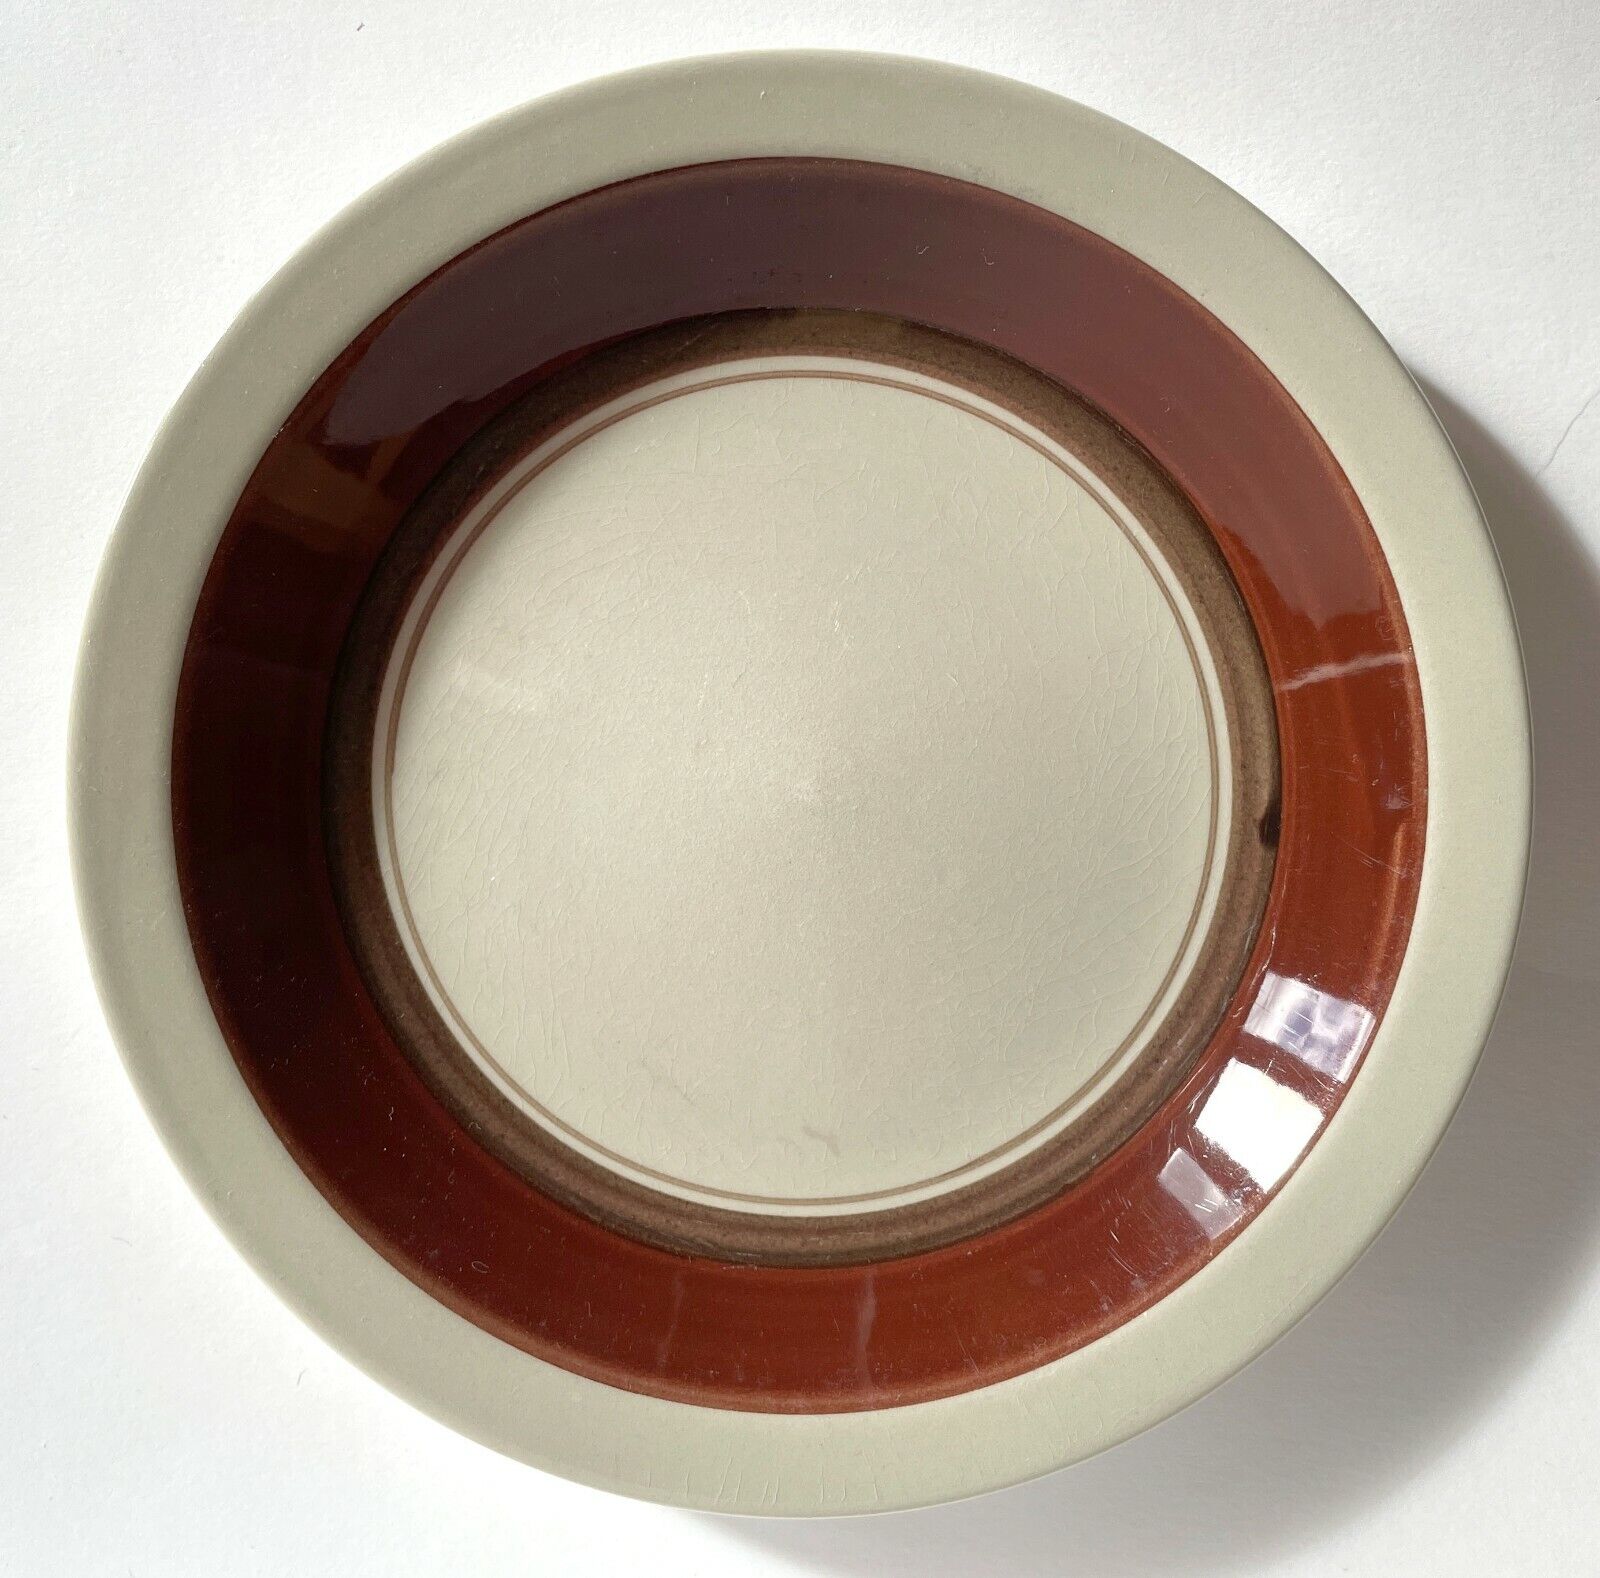 Vintage Figgjo Norway dish Rolf Design Dovre ceramic plate handpainted